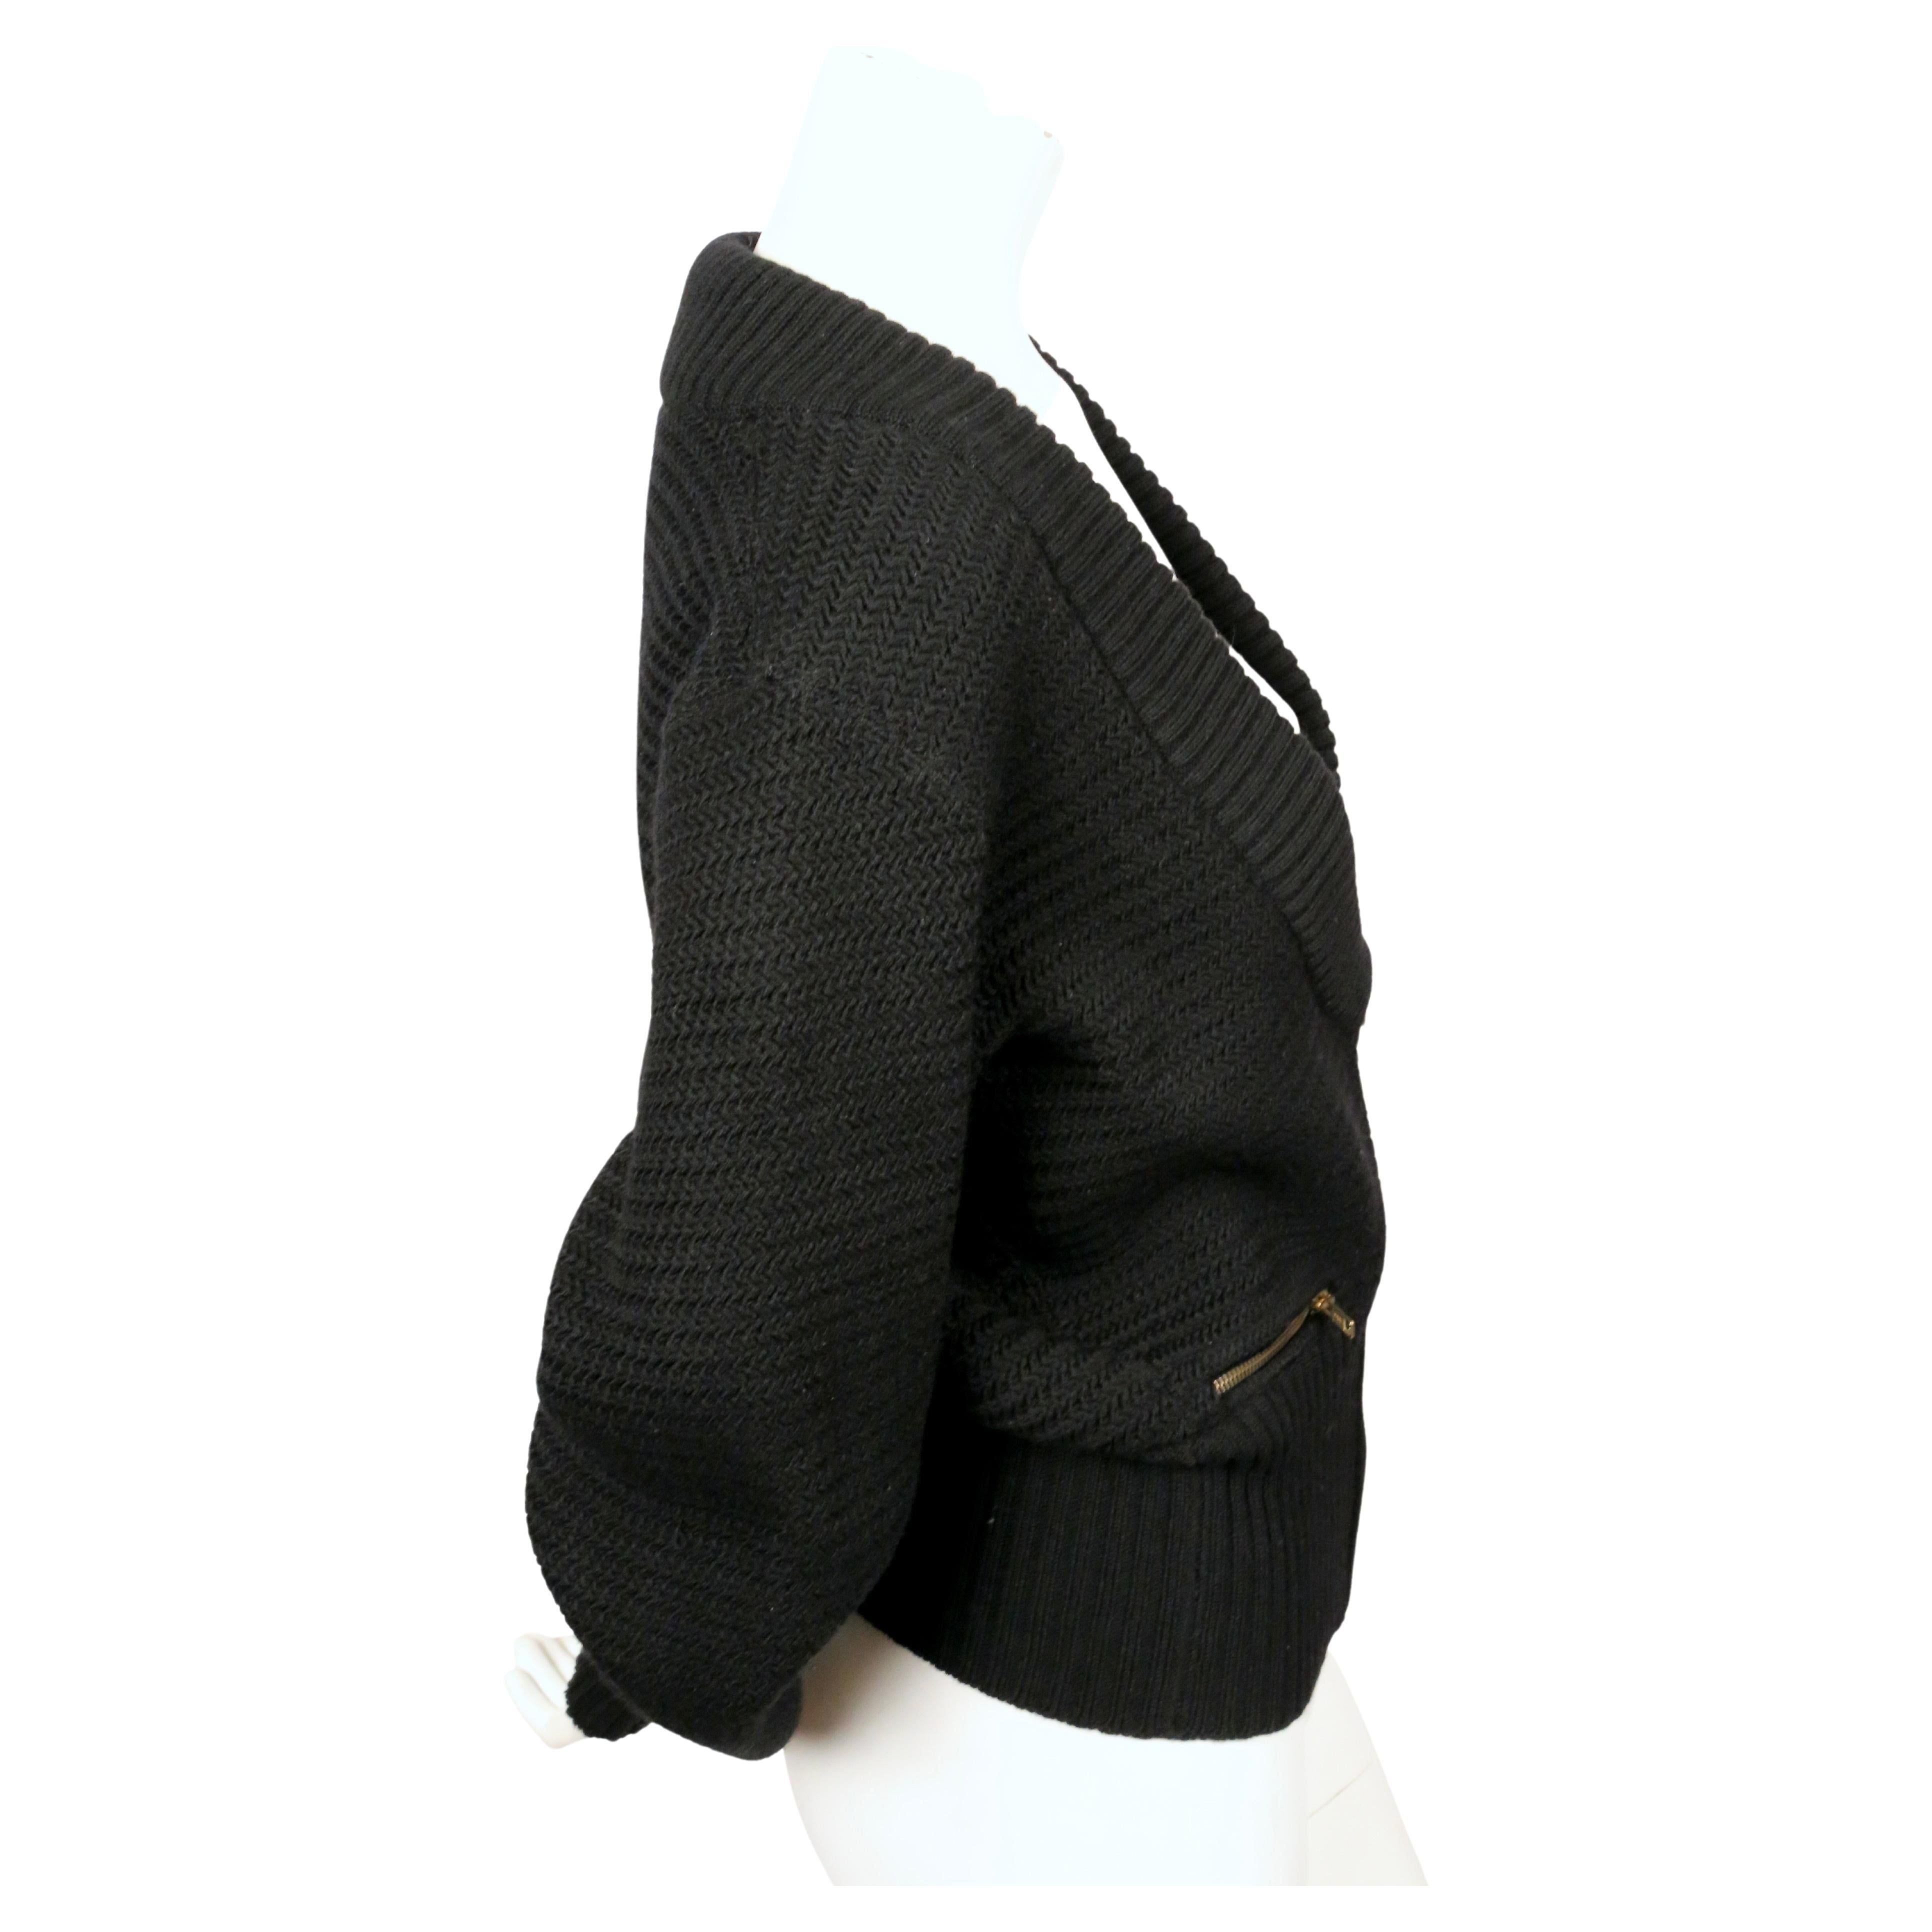 Black 1986 AZZEDINE ALAIA heavy knit black RUNWAY cardigan sweater coat with zippers